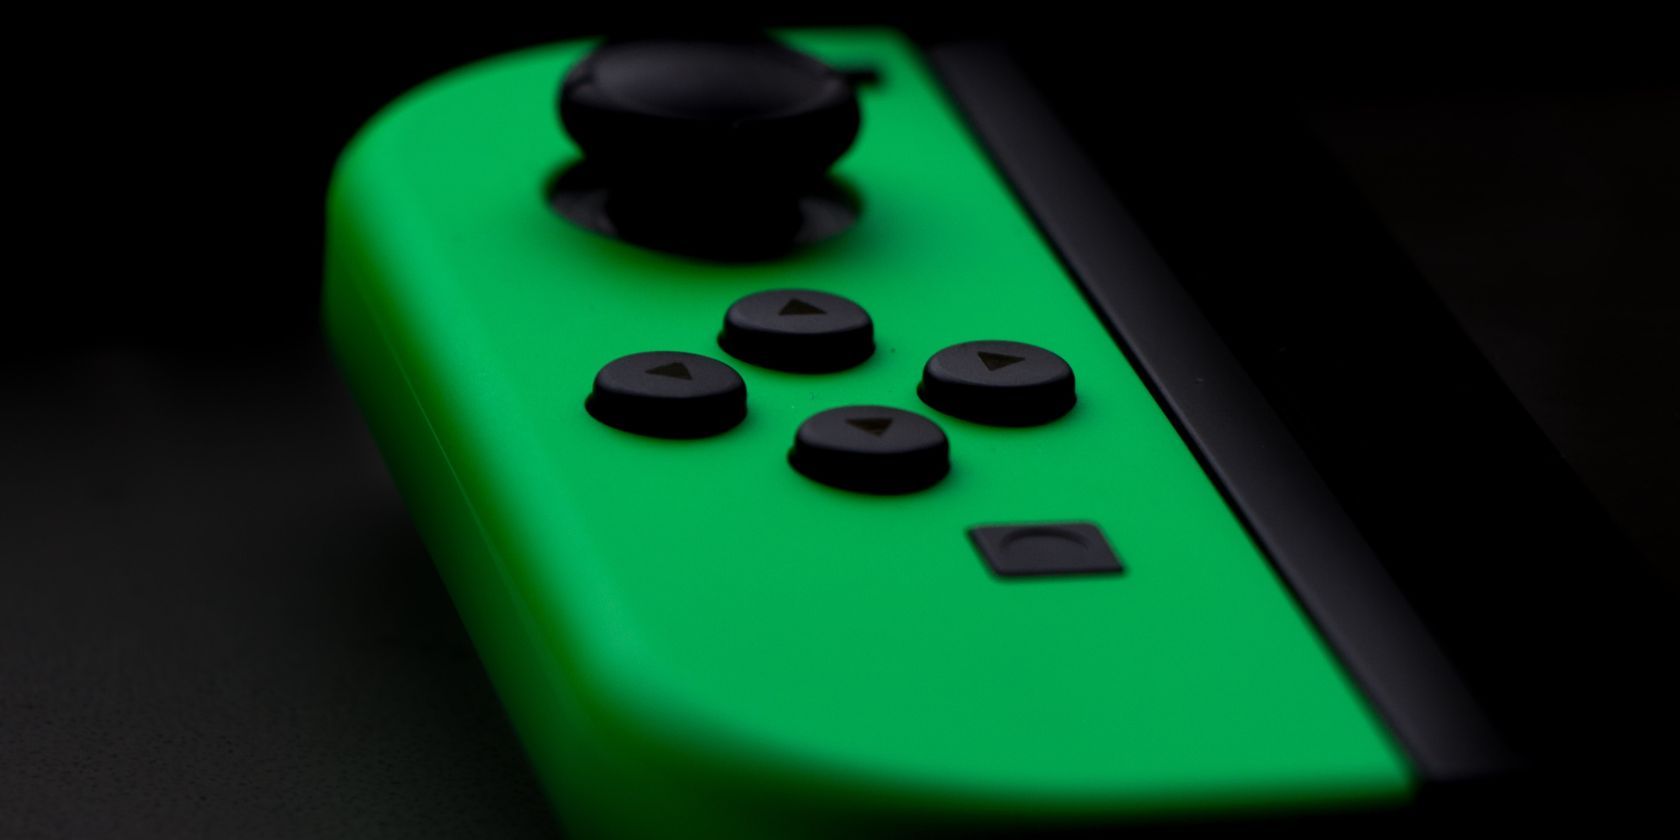 Tampilan dekat joy con Nintendo Switch berwarna hijau neon